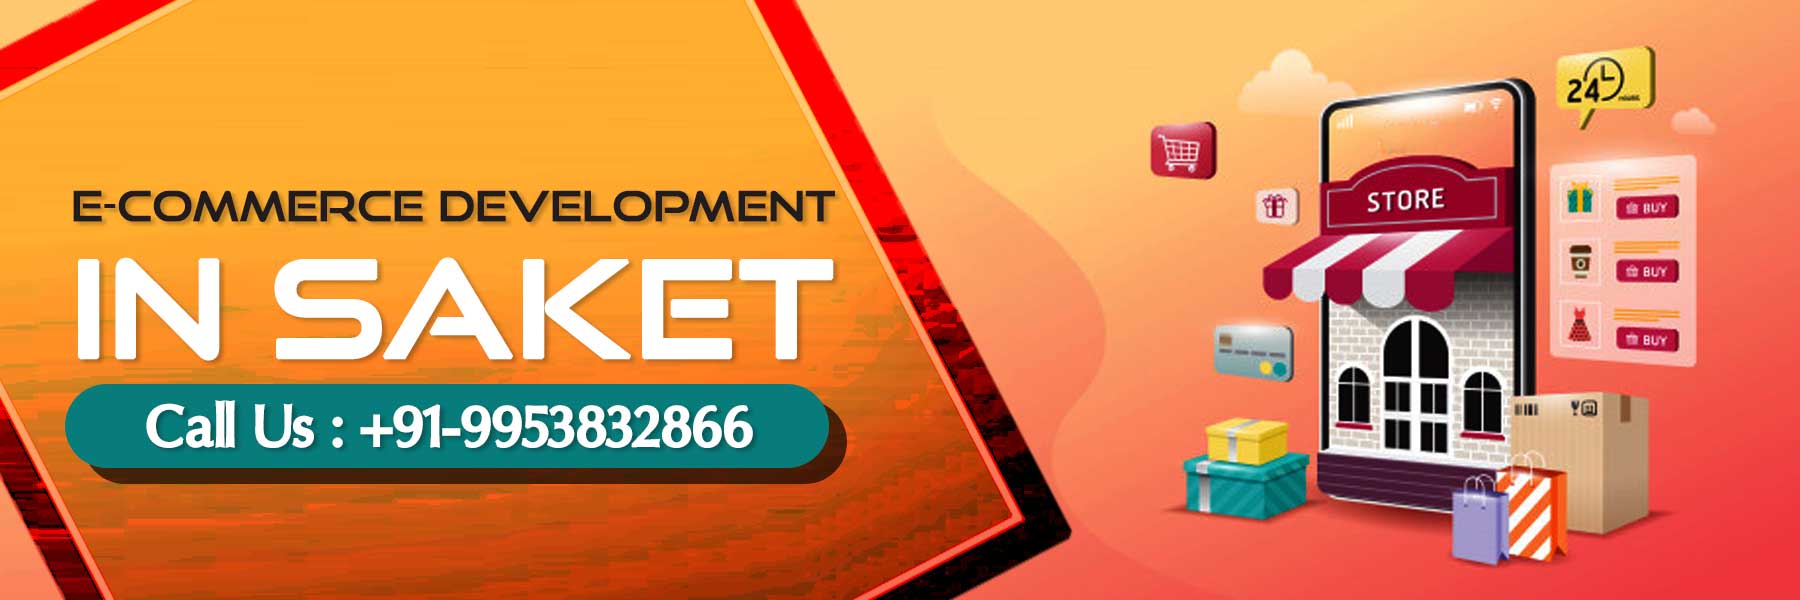 ecommerce development in Saket